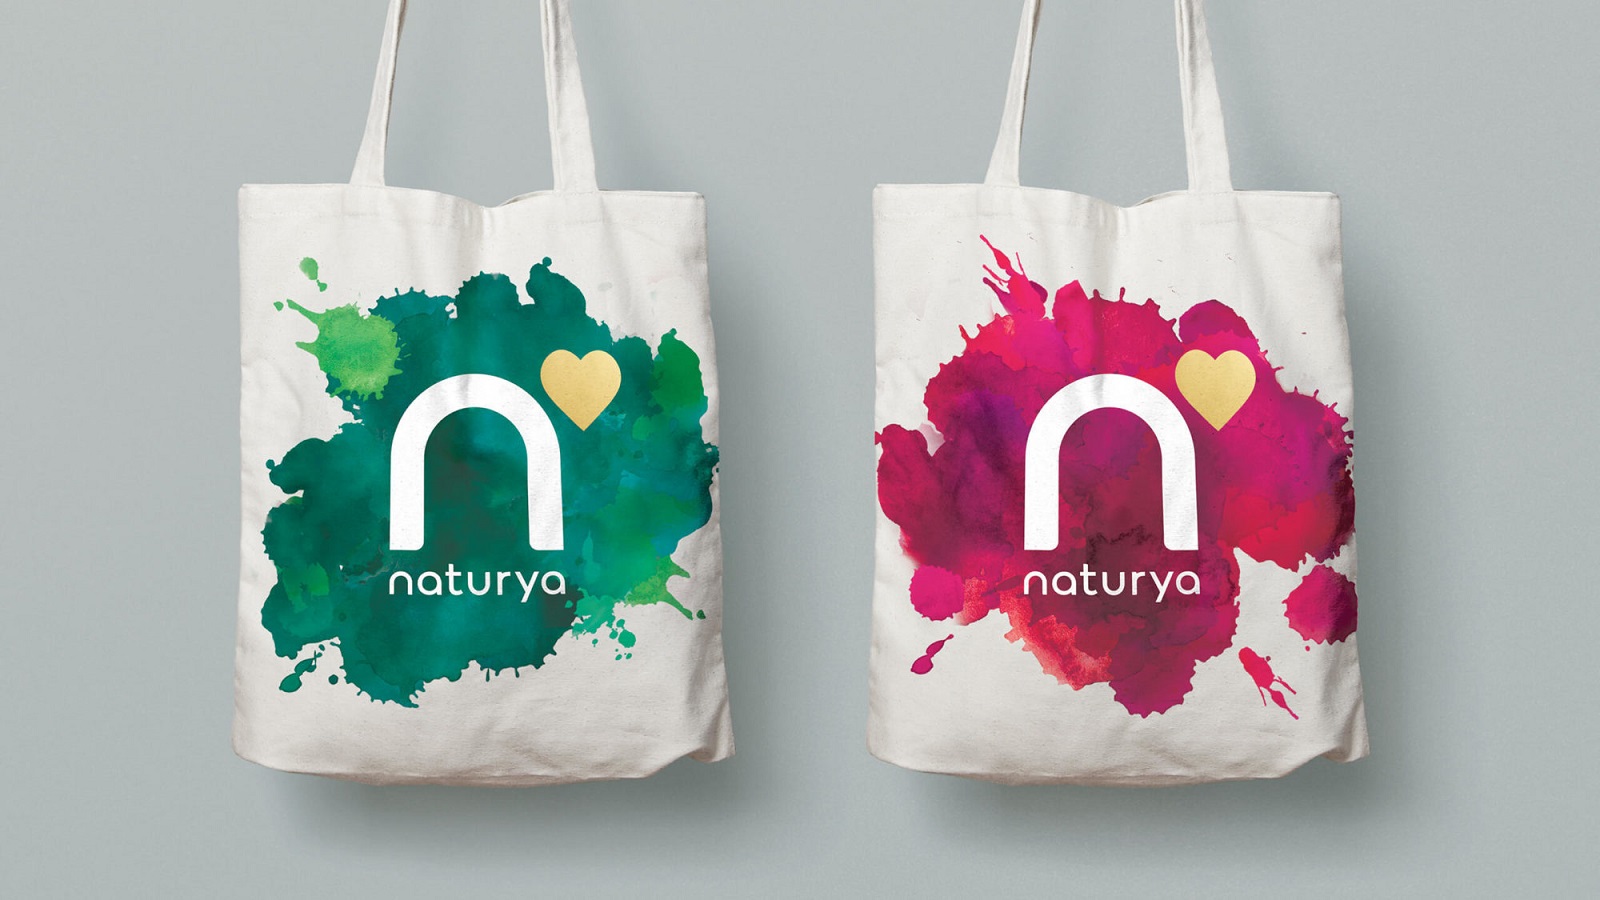 Naturya’s Vibrant New Visual Identity Purifies the Mind